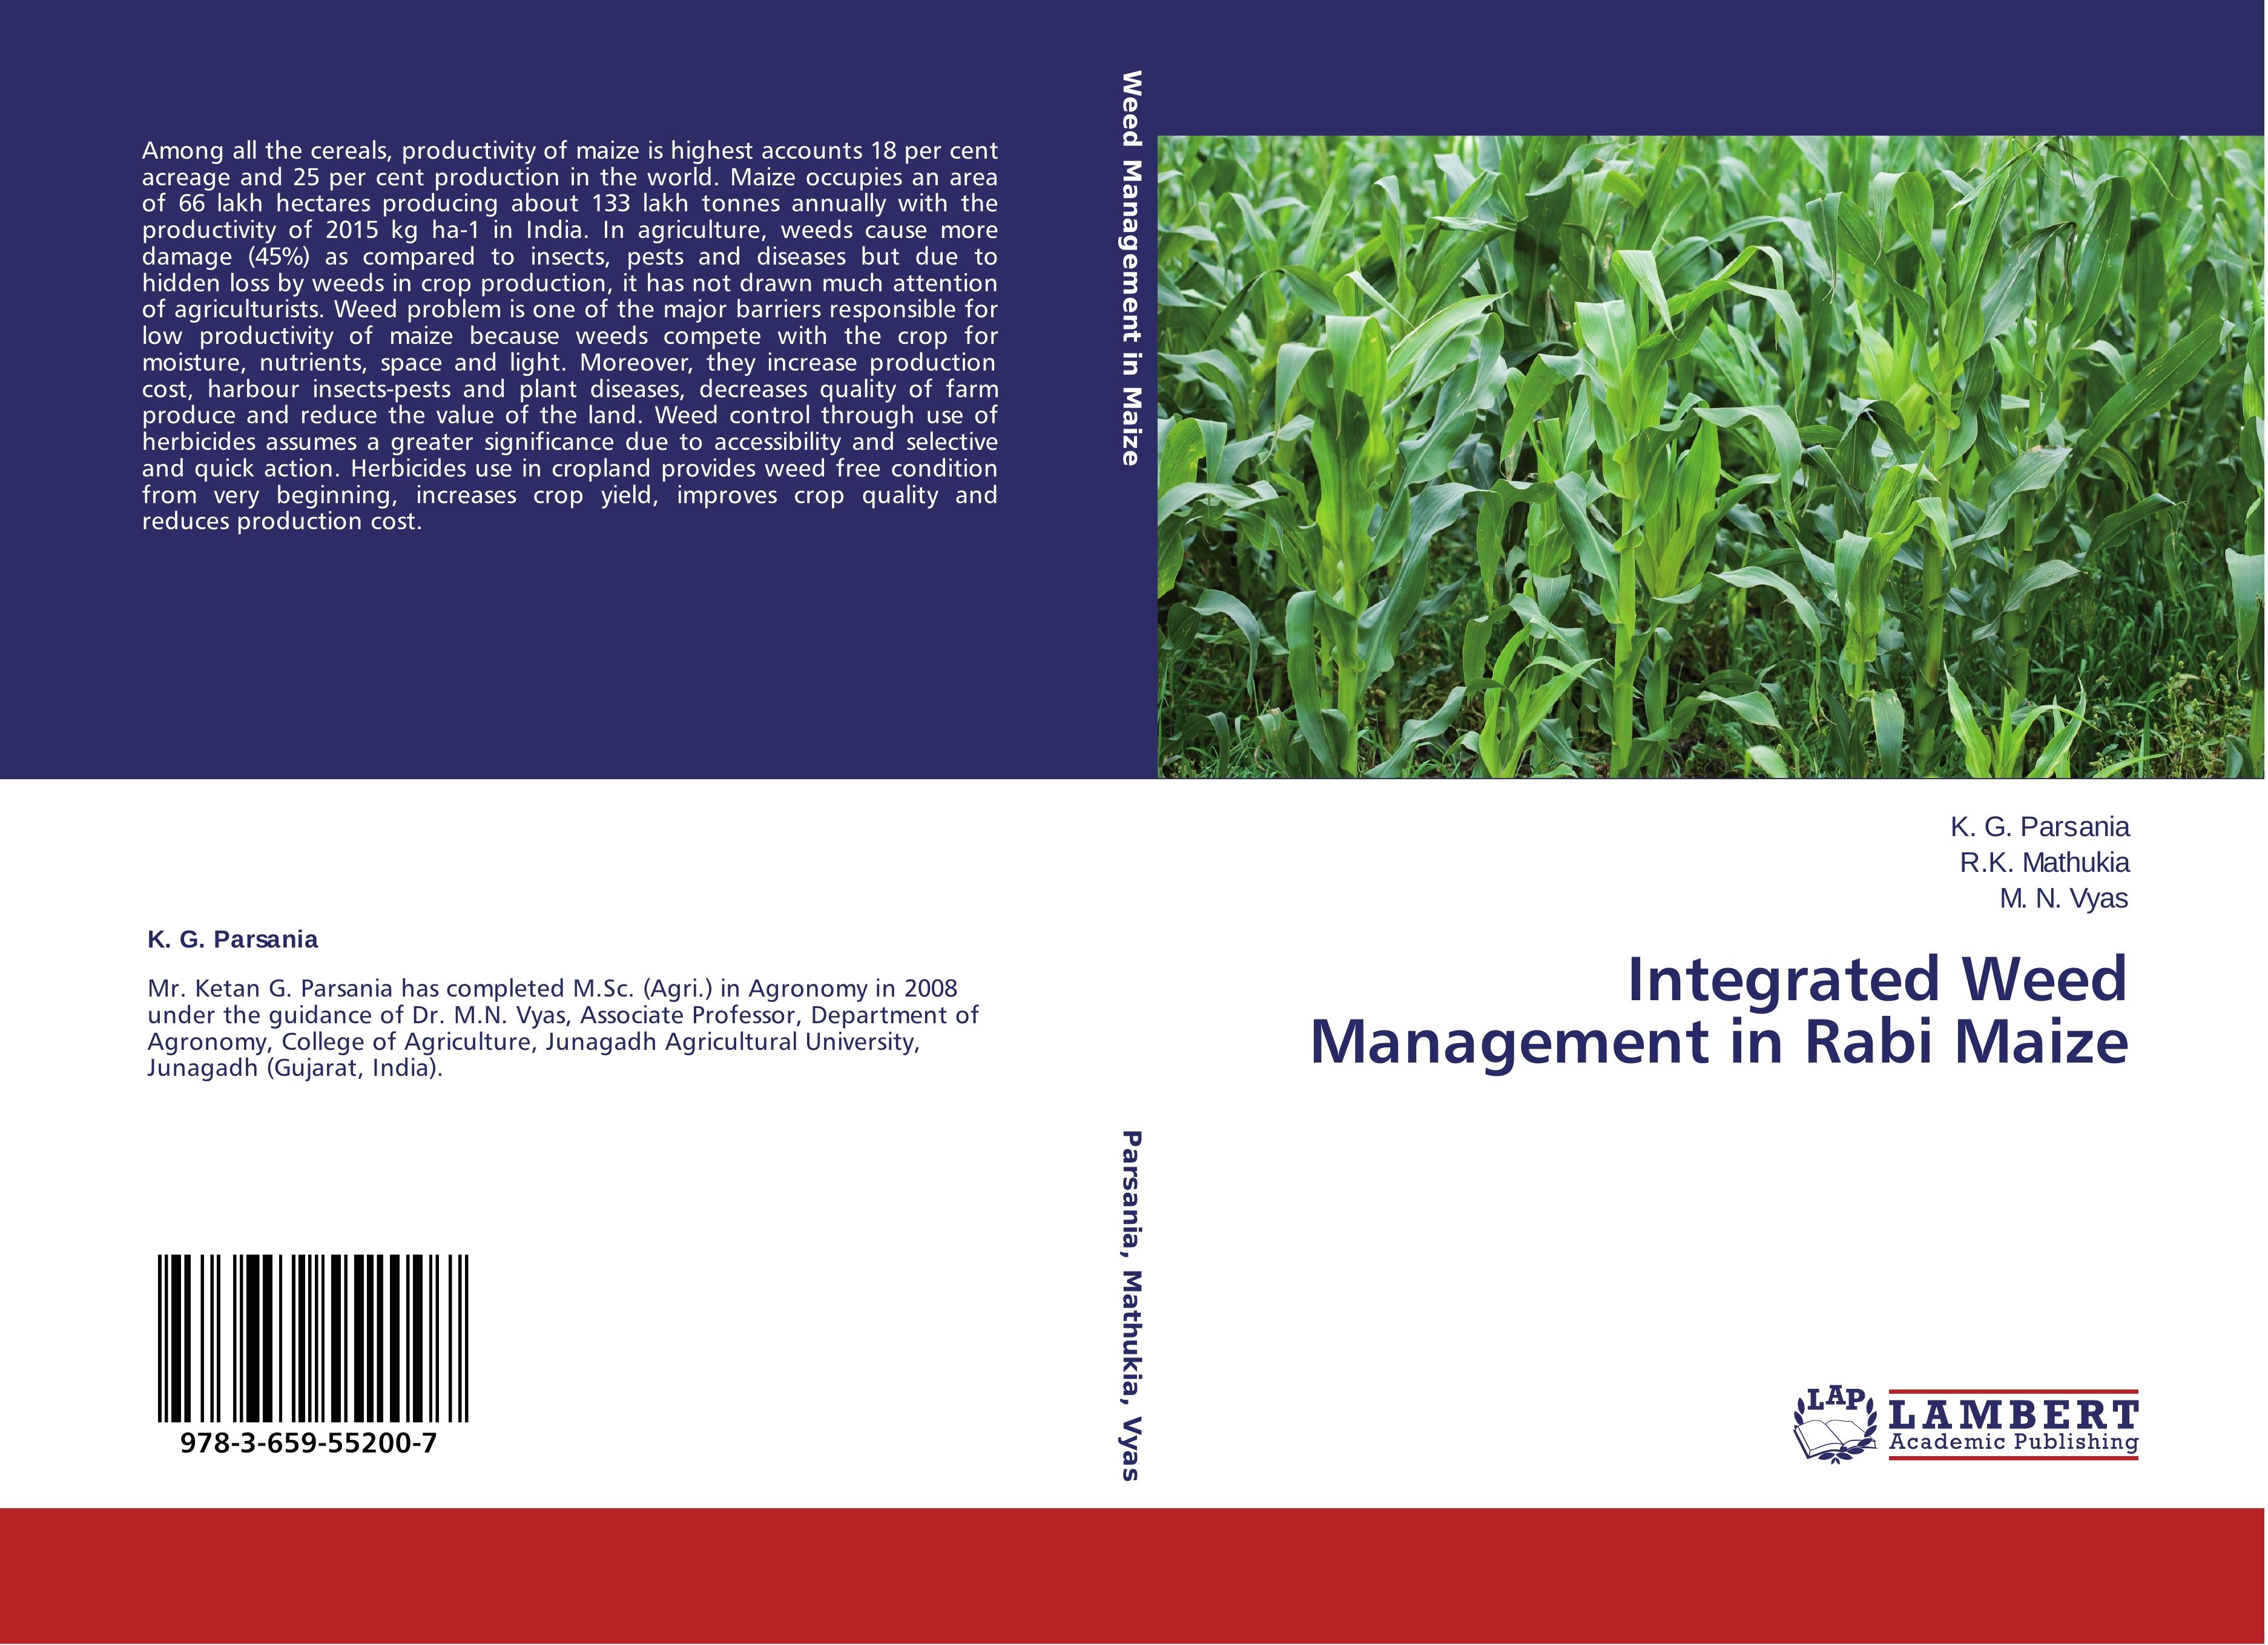 Integrated Weed Management in Rabi Maize - Parsania, K. G. Mathukia, R. K. Vyas, M. N.